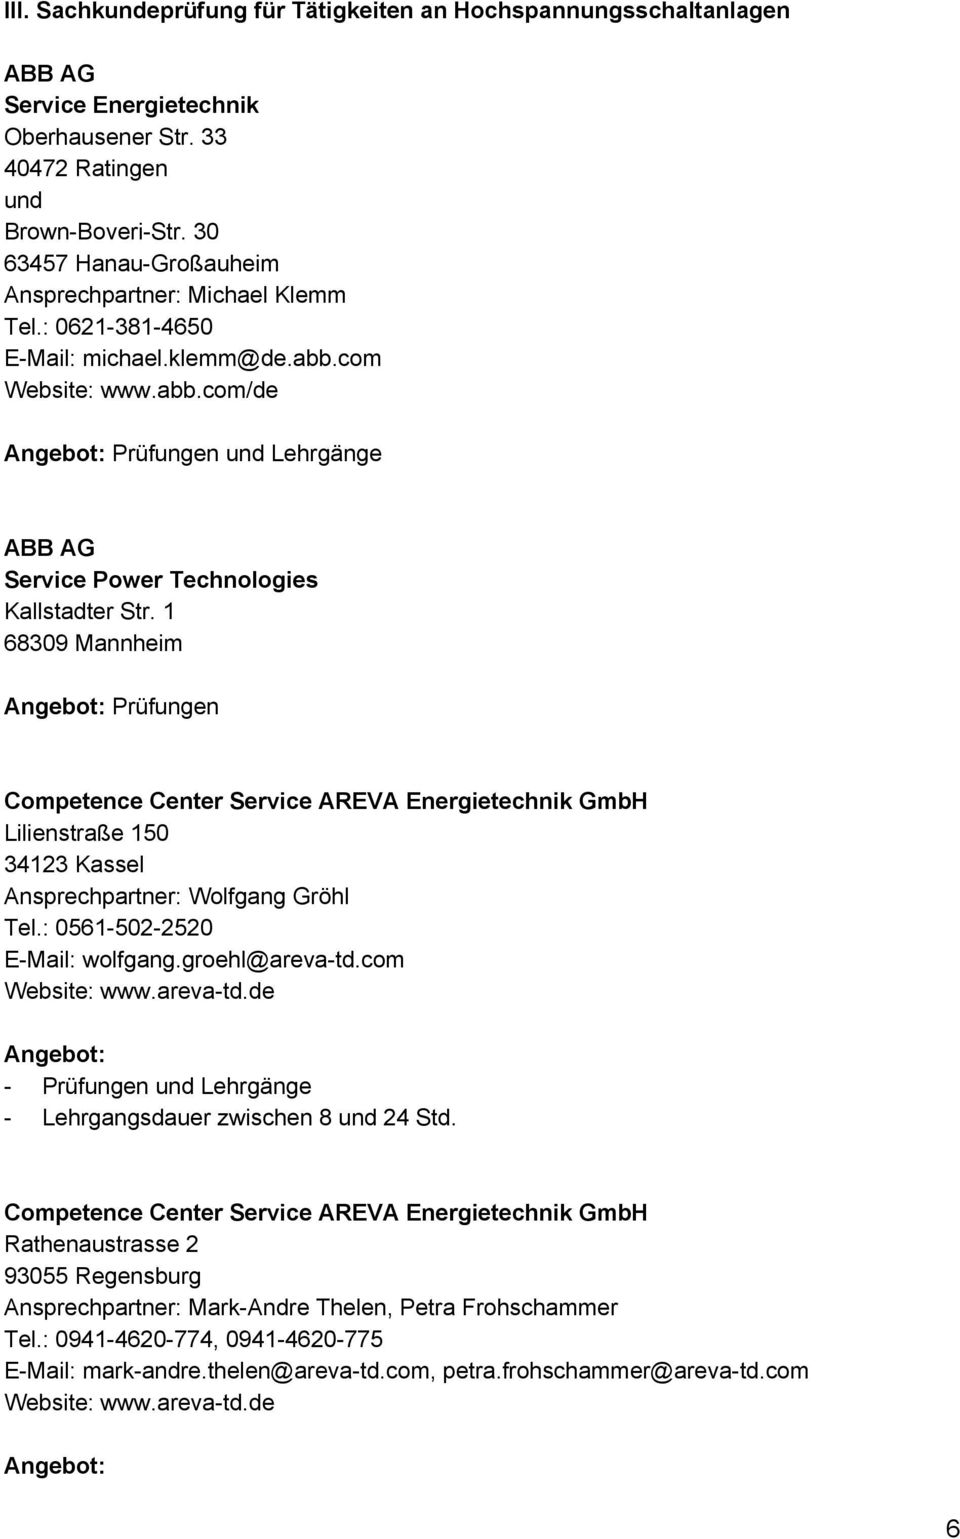 1 68309 Mannheim Prüfungen Competence Center Service AREVA Energietechnik GmbH Lilienstraße 150 34123 Kassel Ansprechpartner: Wolfgang Gröhl Tel.: 0561-502-2520 E-Mail: wolfgang.groehl@areva-td.